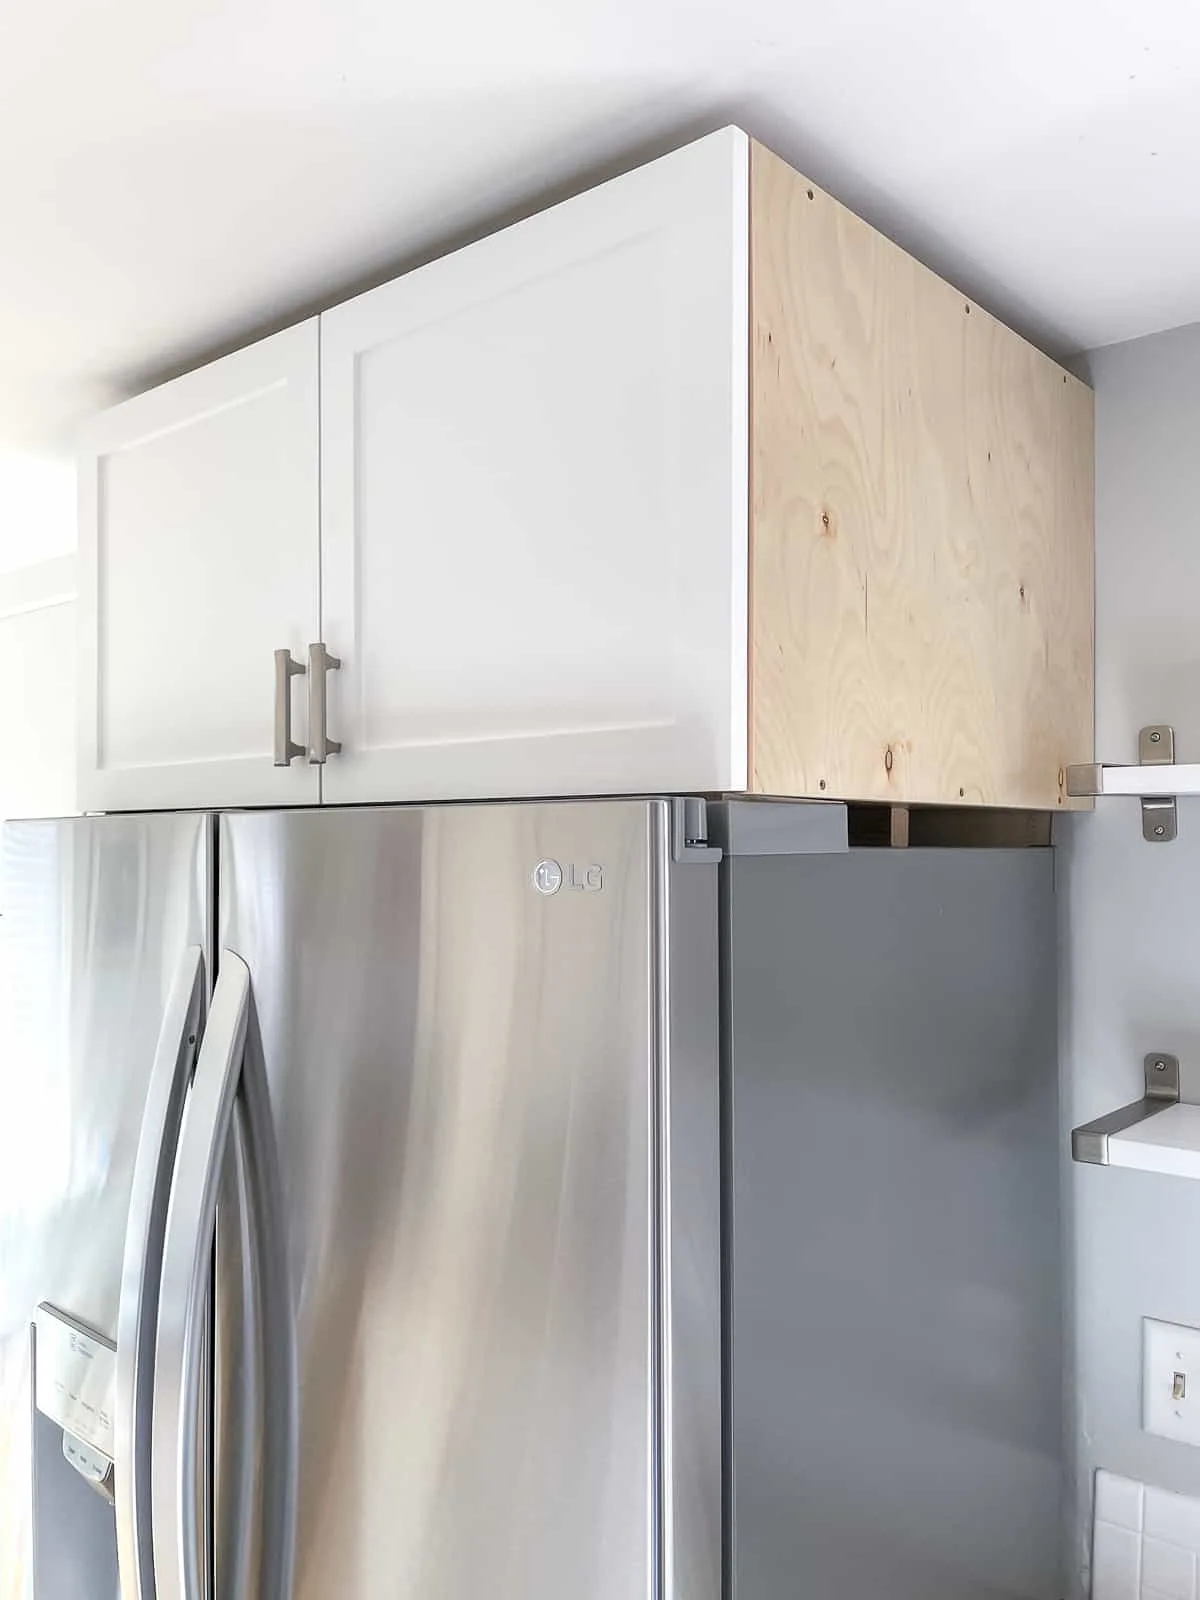 DIY over fridge cabinet